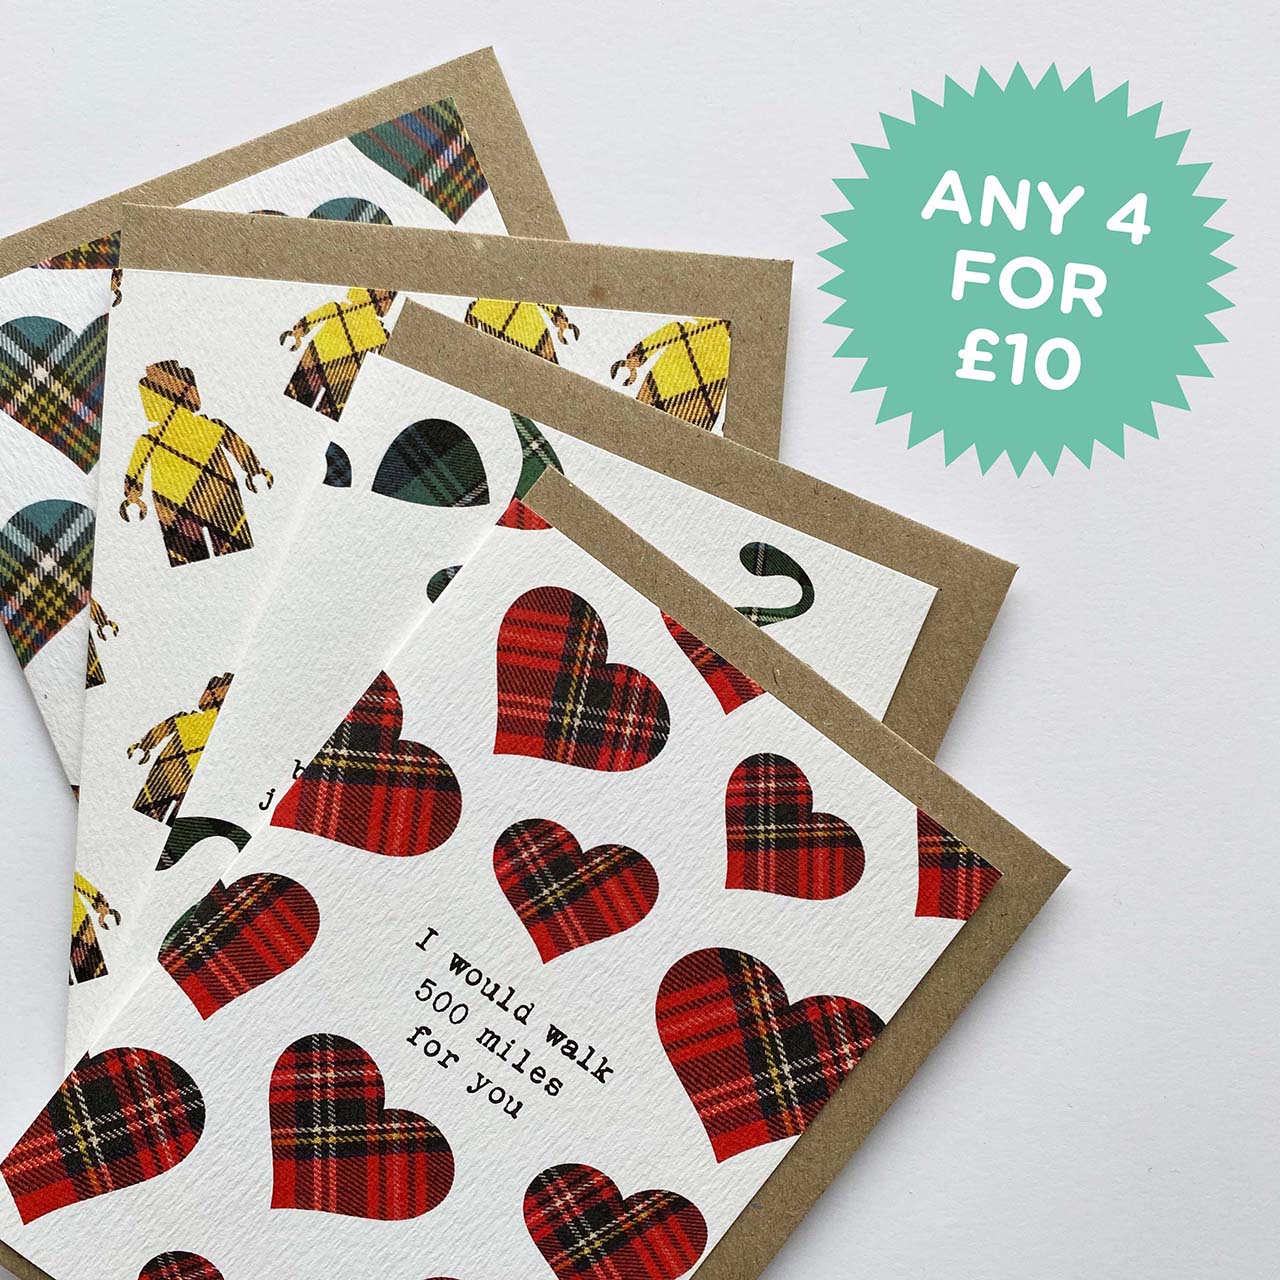 4 Printed Scottish Cards for £10 - HiyaPal